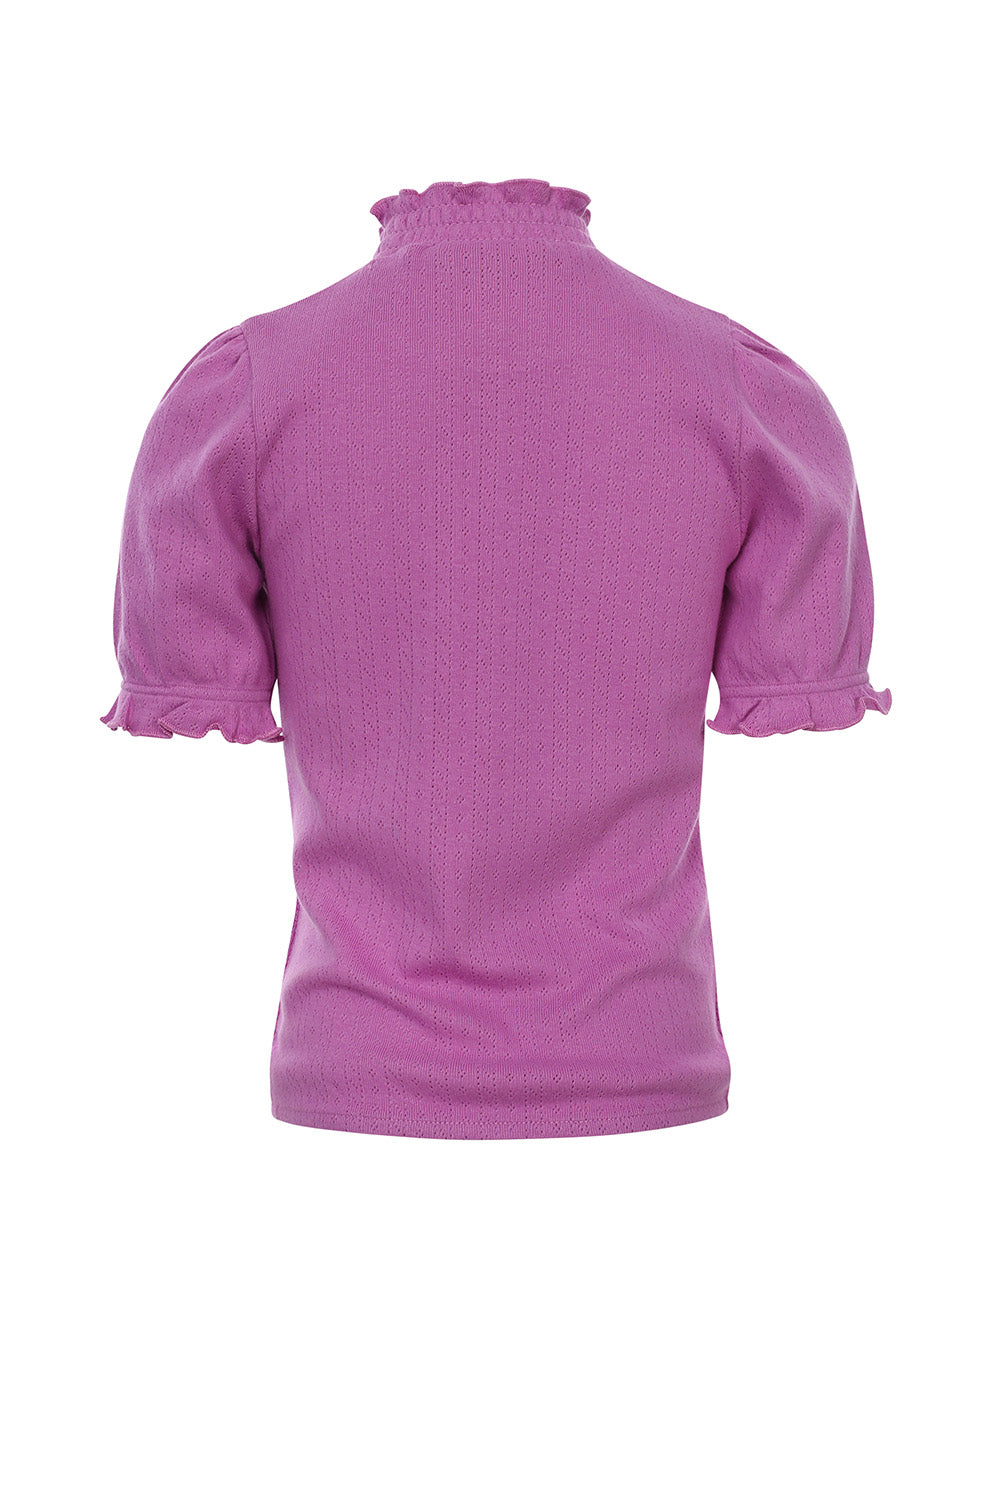 Meisjes T-Shirt van LOOXS Little in de kleur Purple Fuchsia in maat 128.